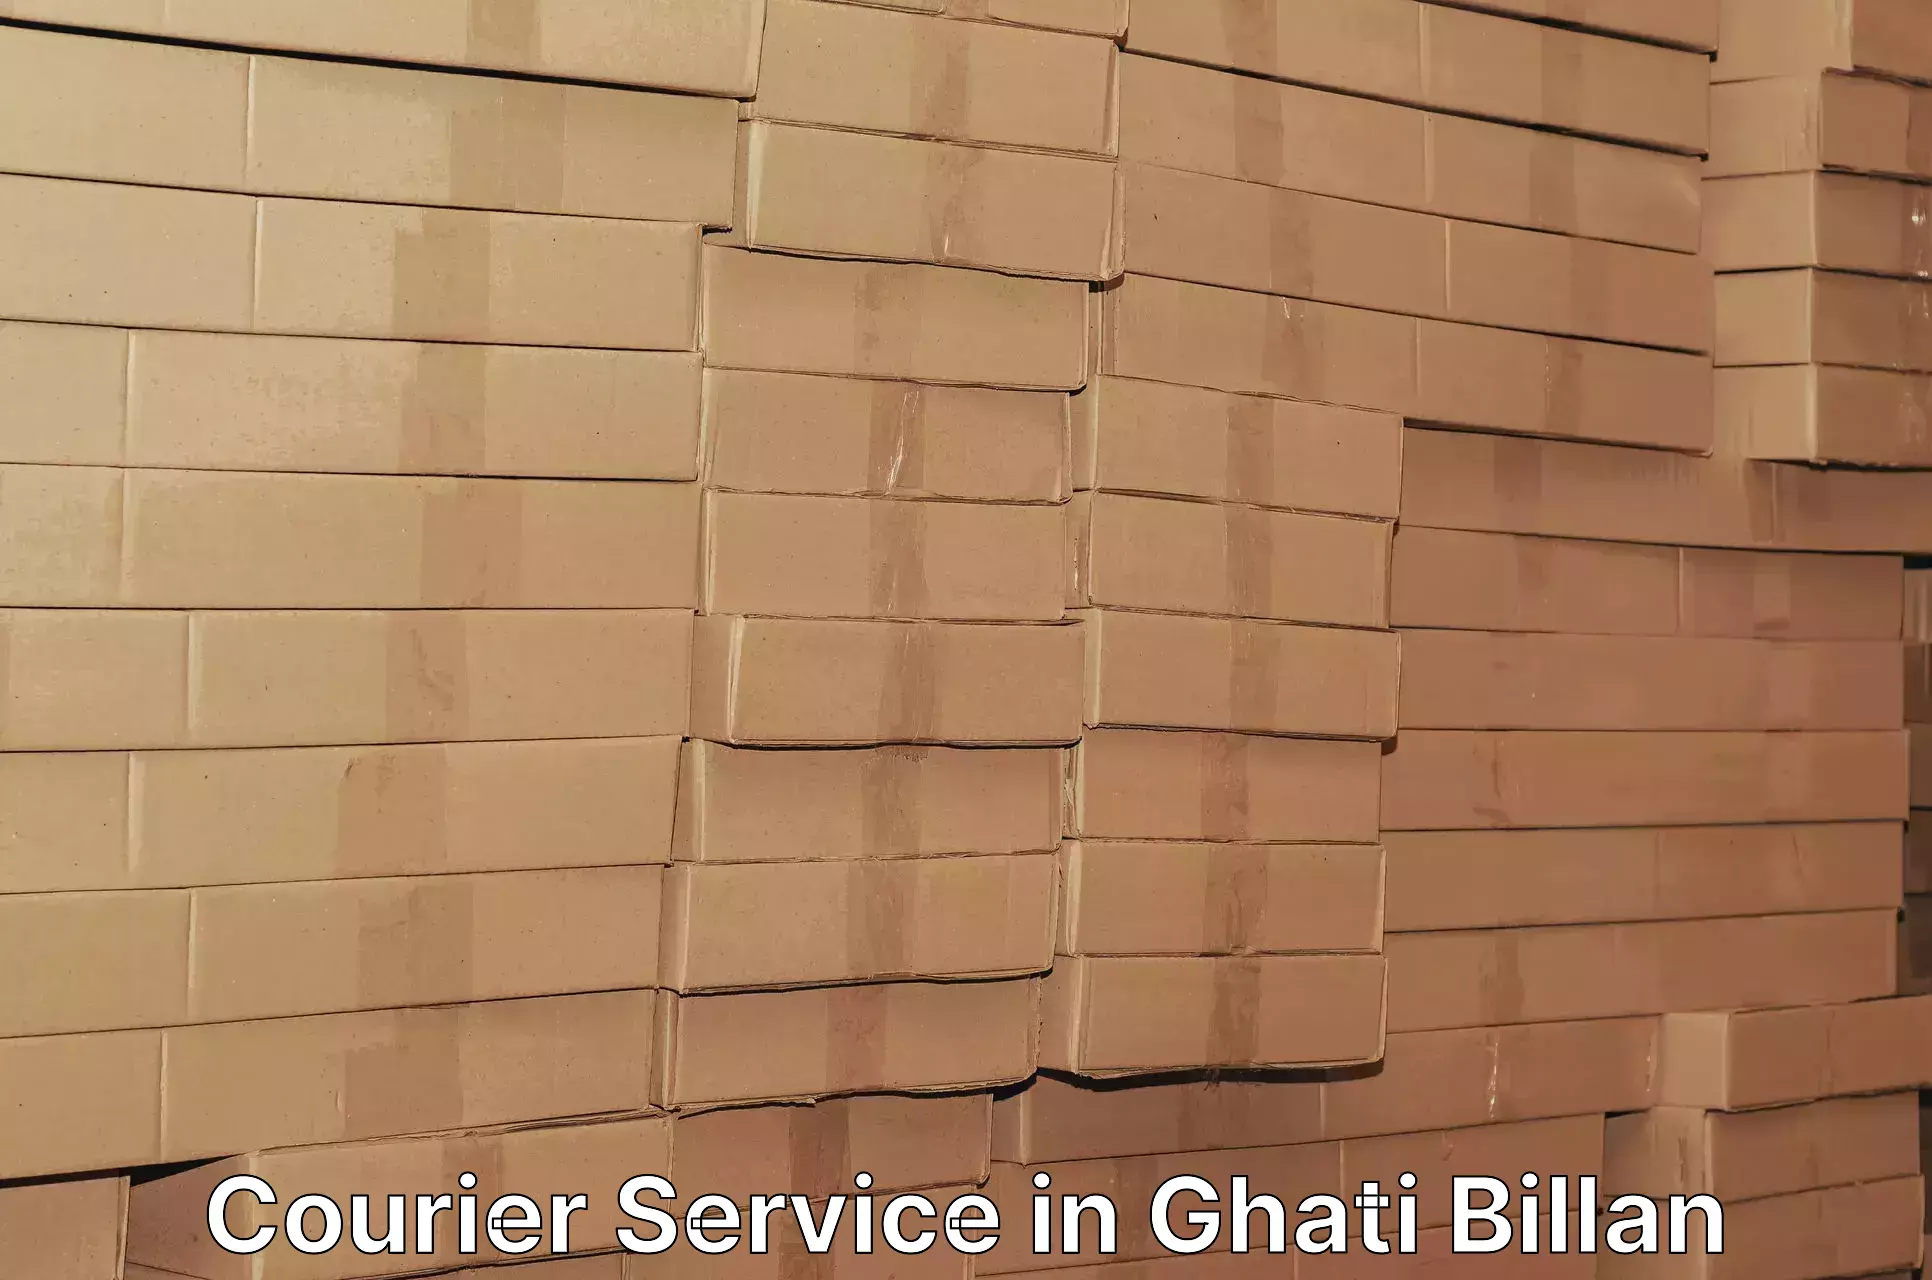 24-hour courier service in Ghati Billan